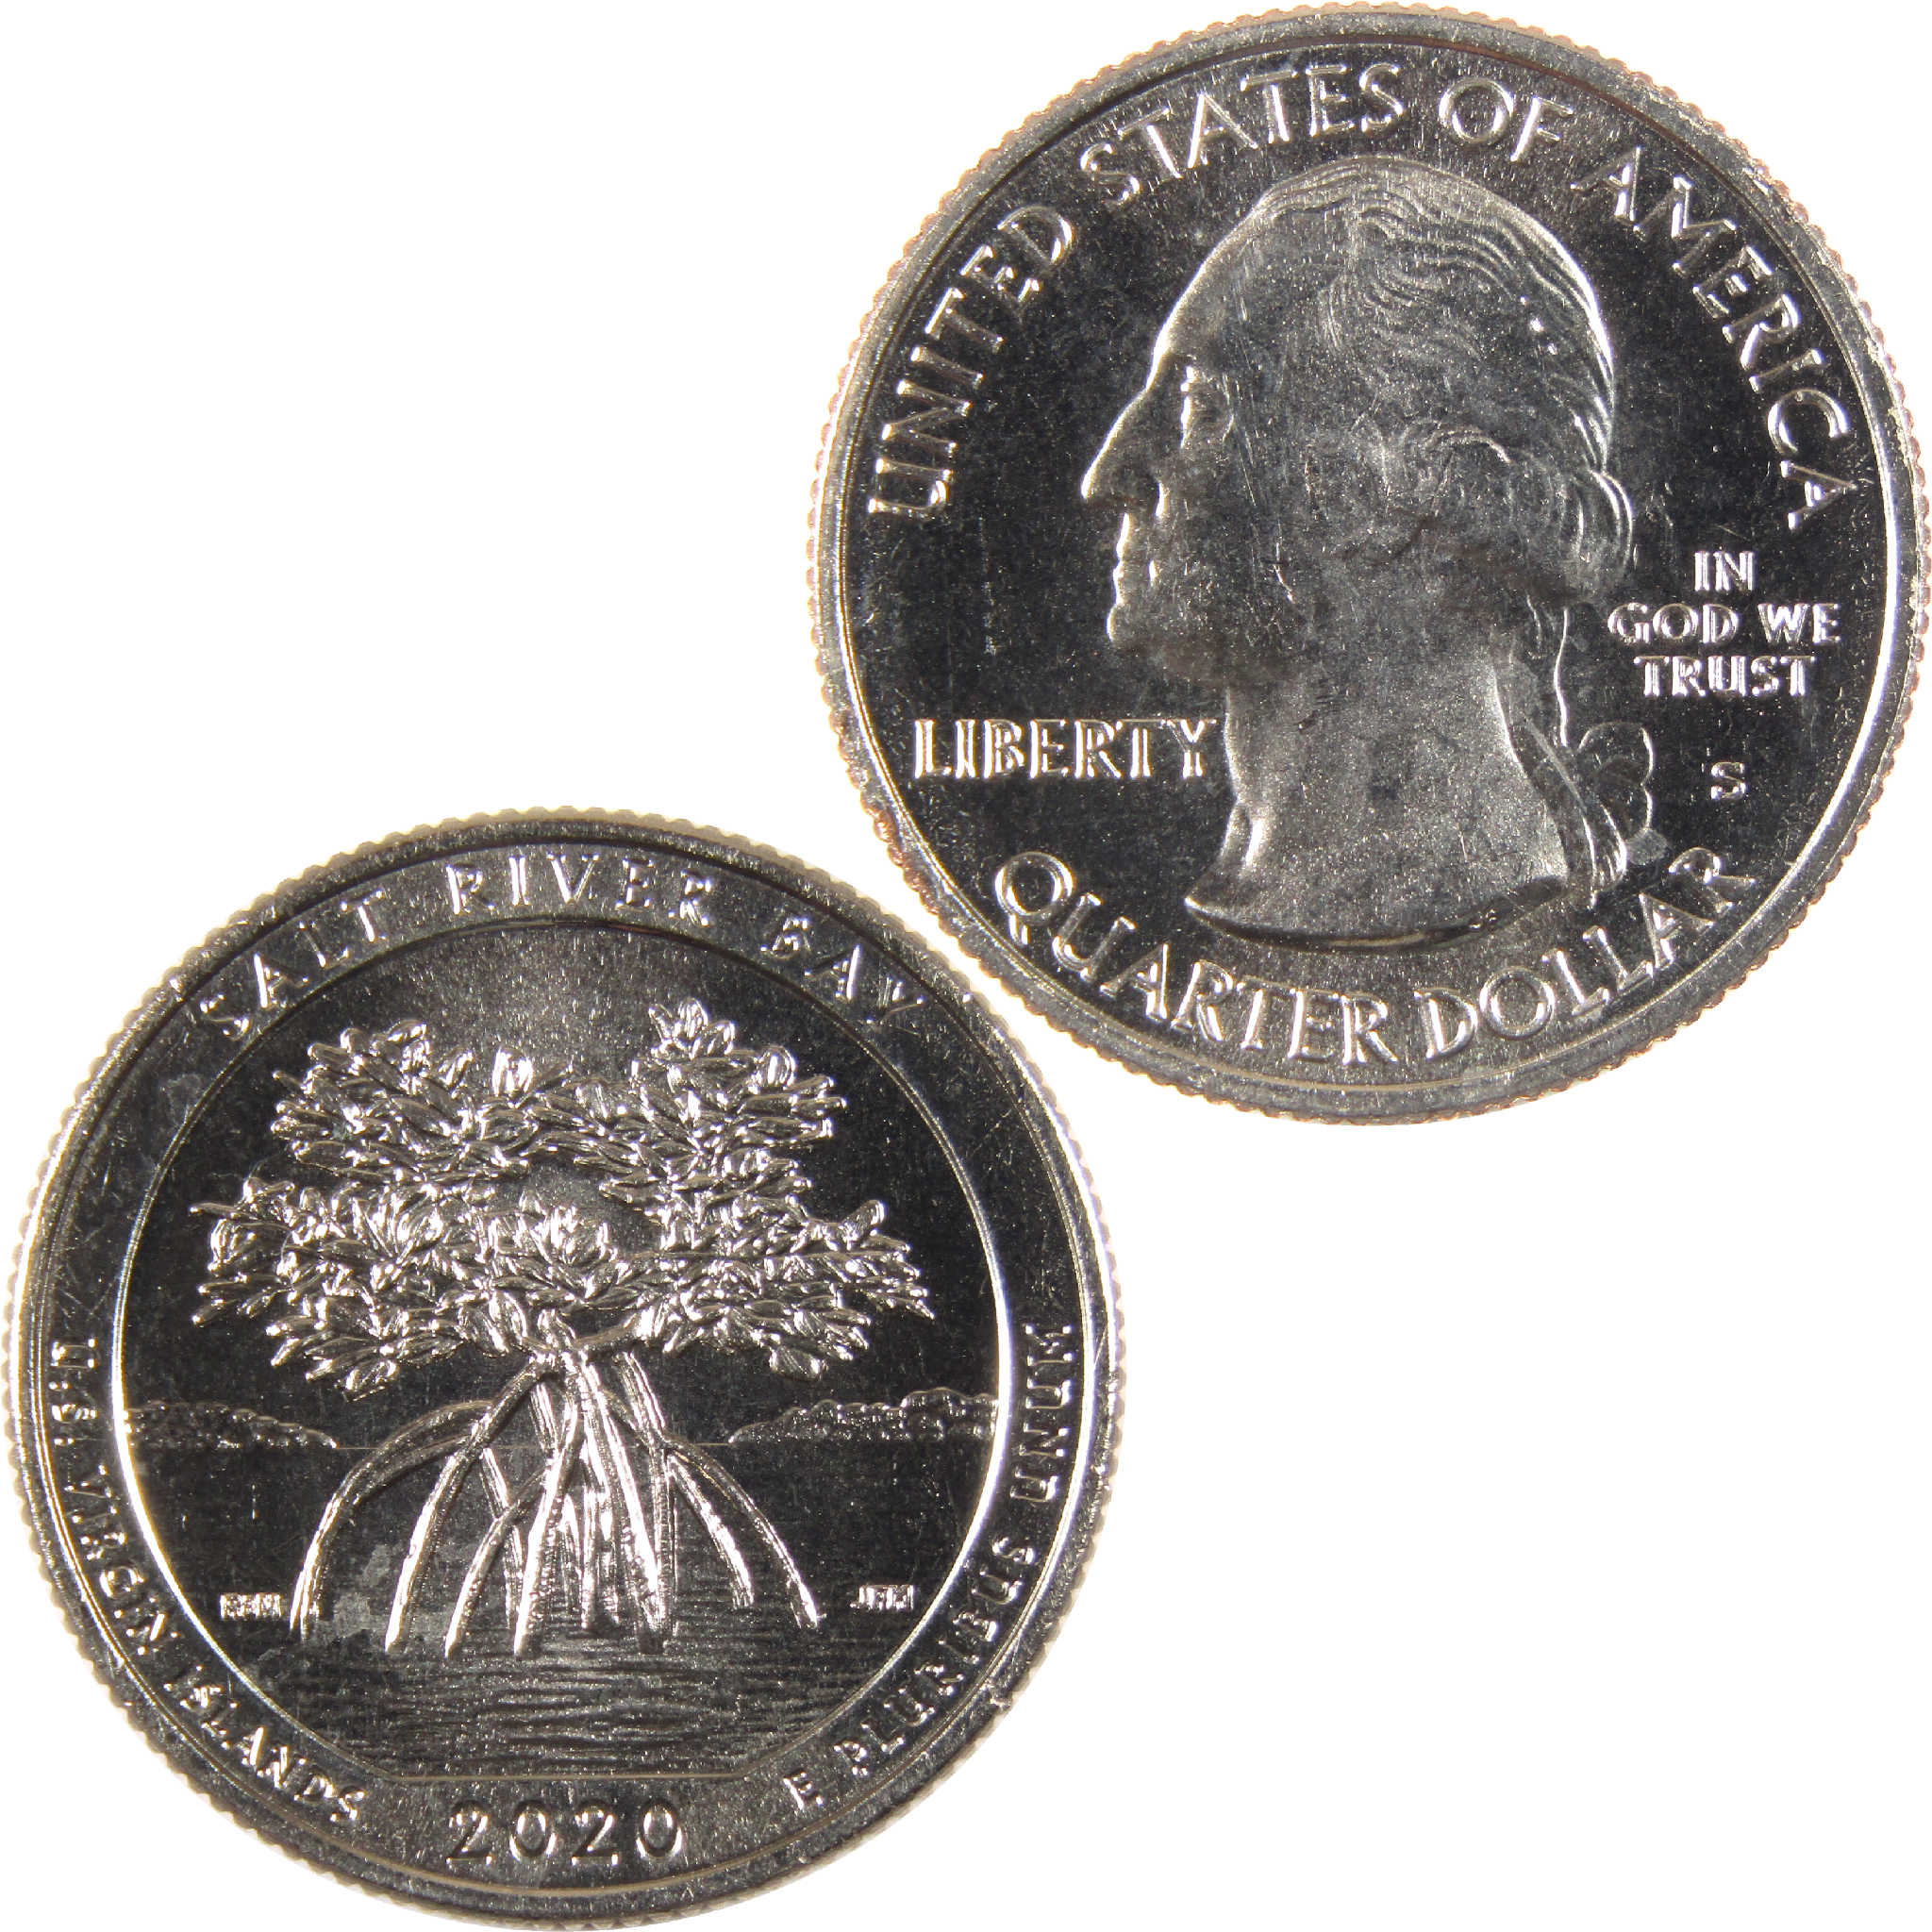 2020 S Salt River Bay National Park Quarter Uncirculated Clad 25c Coin